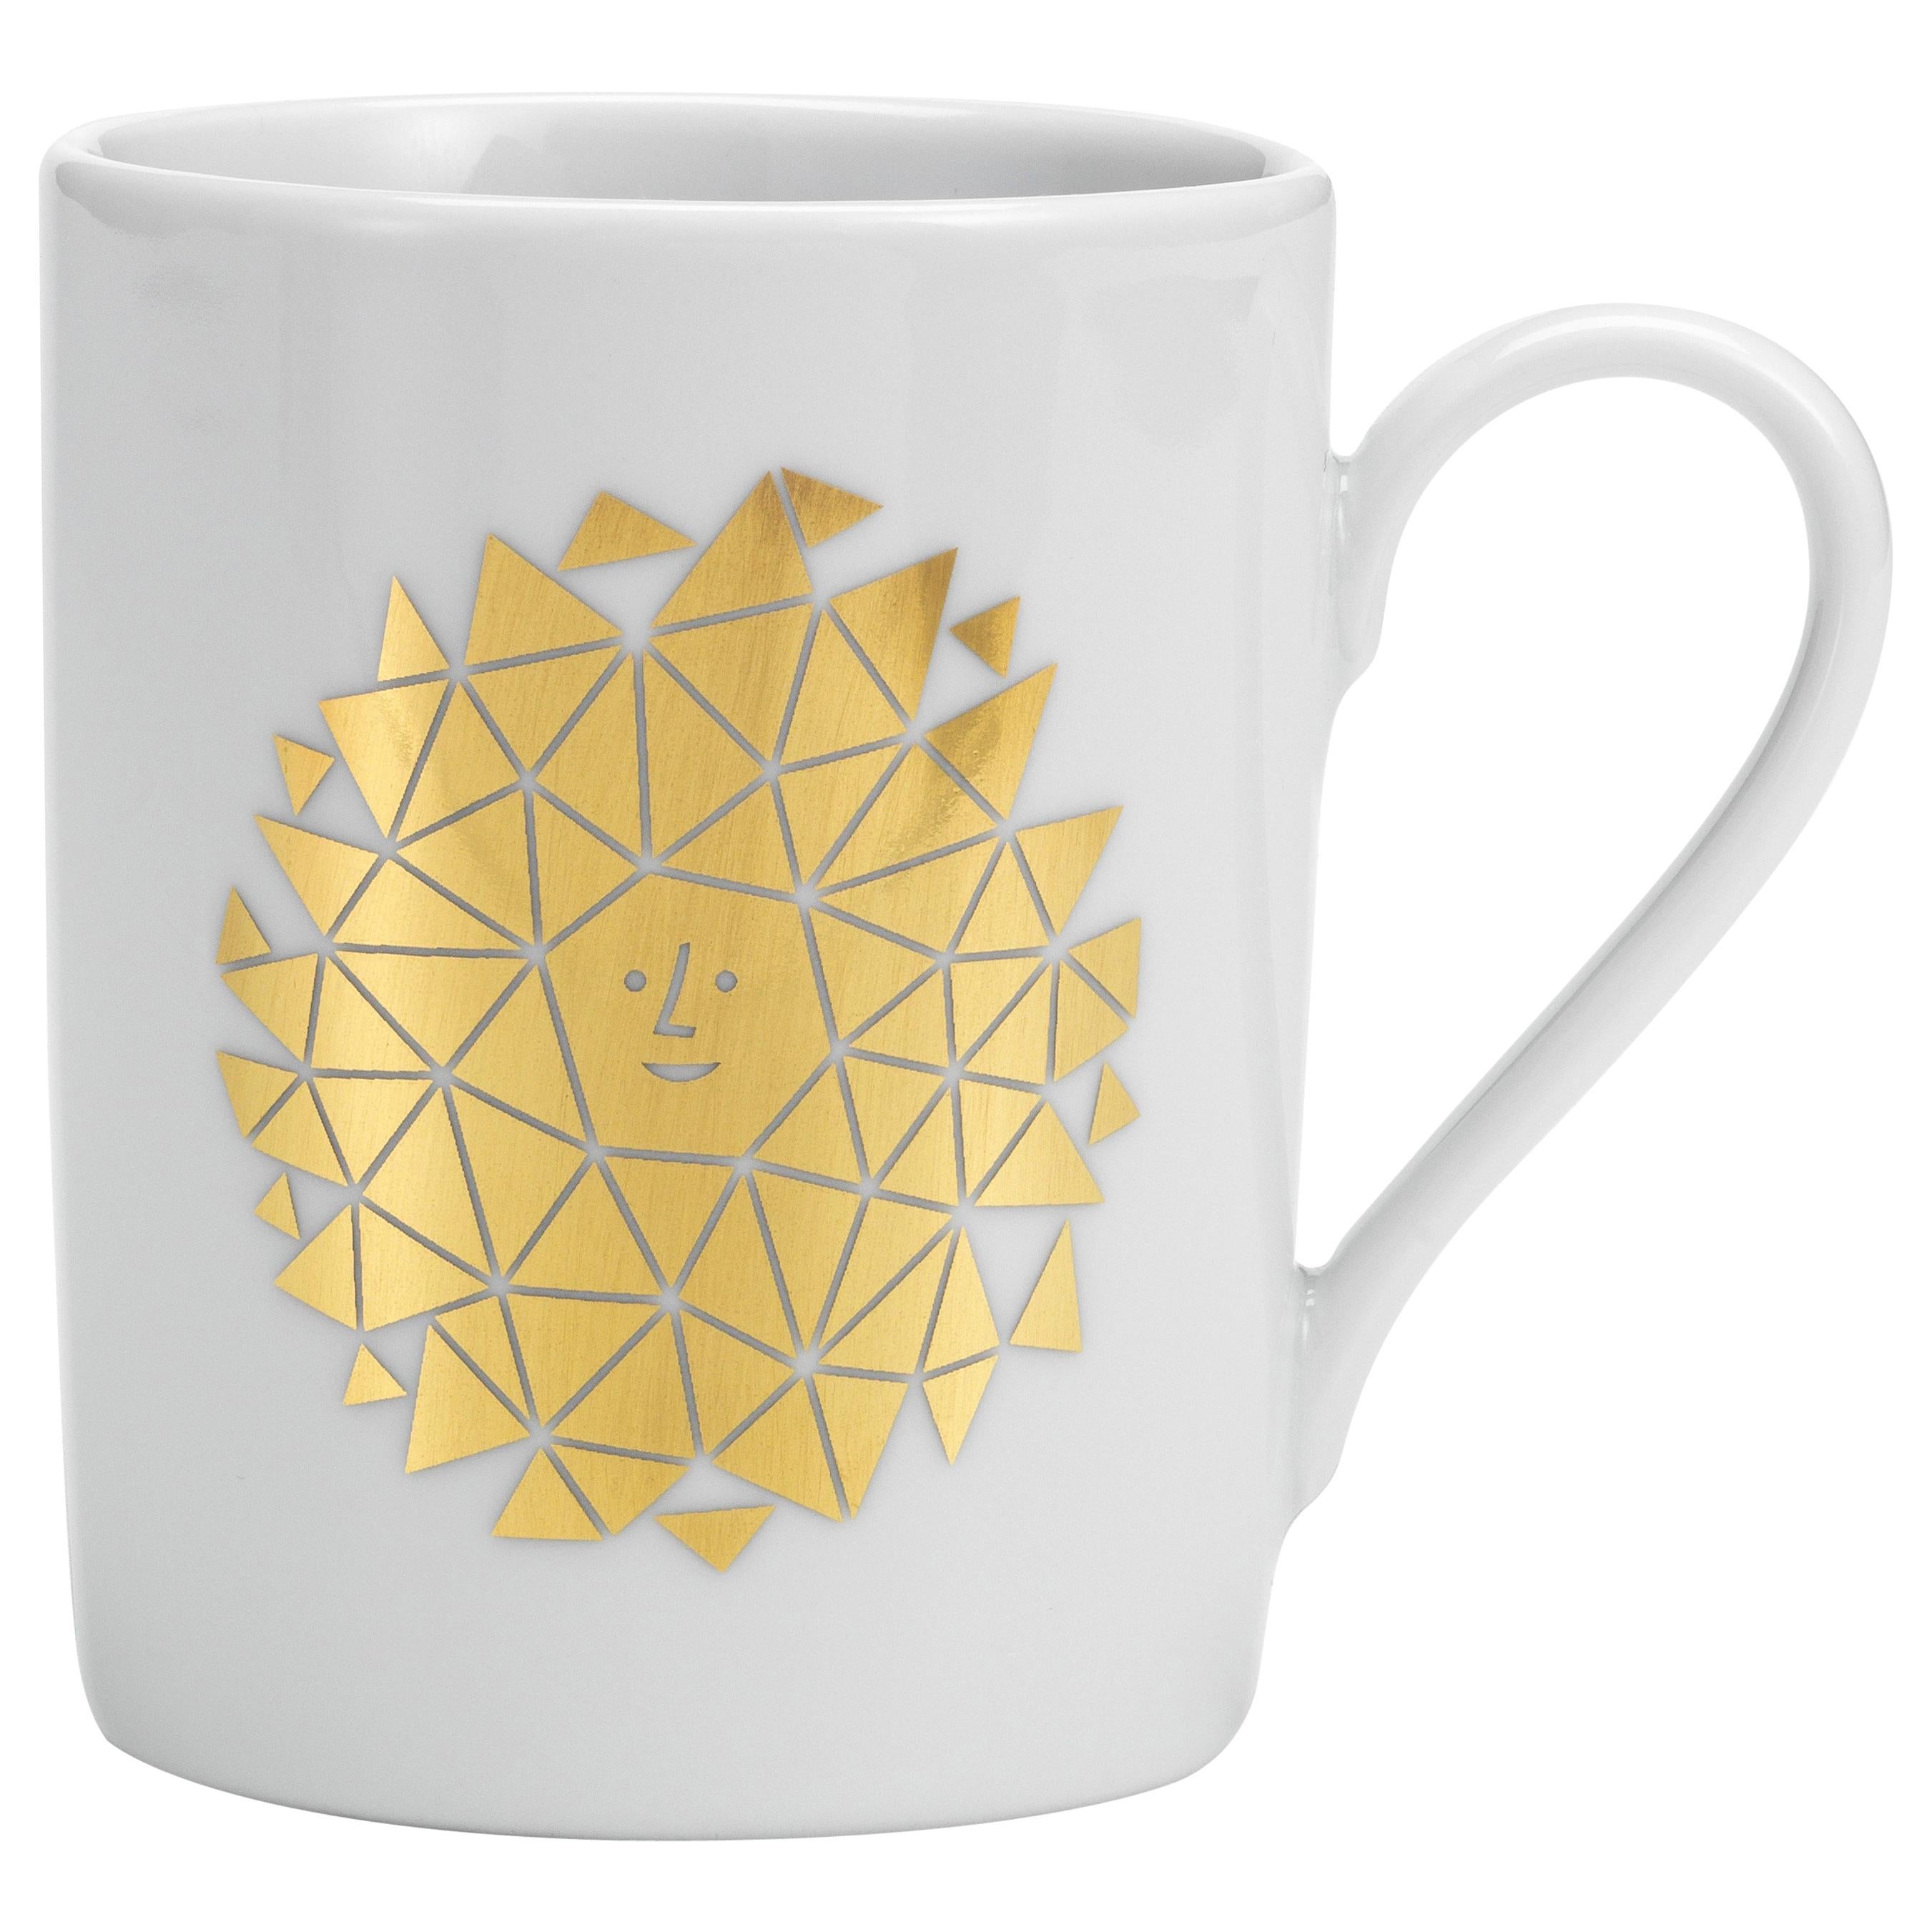 Vitra Coffee Mug with Gold New Sun by Alexander Girard - 1stdibs New York For Sale